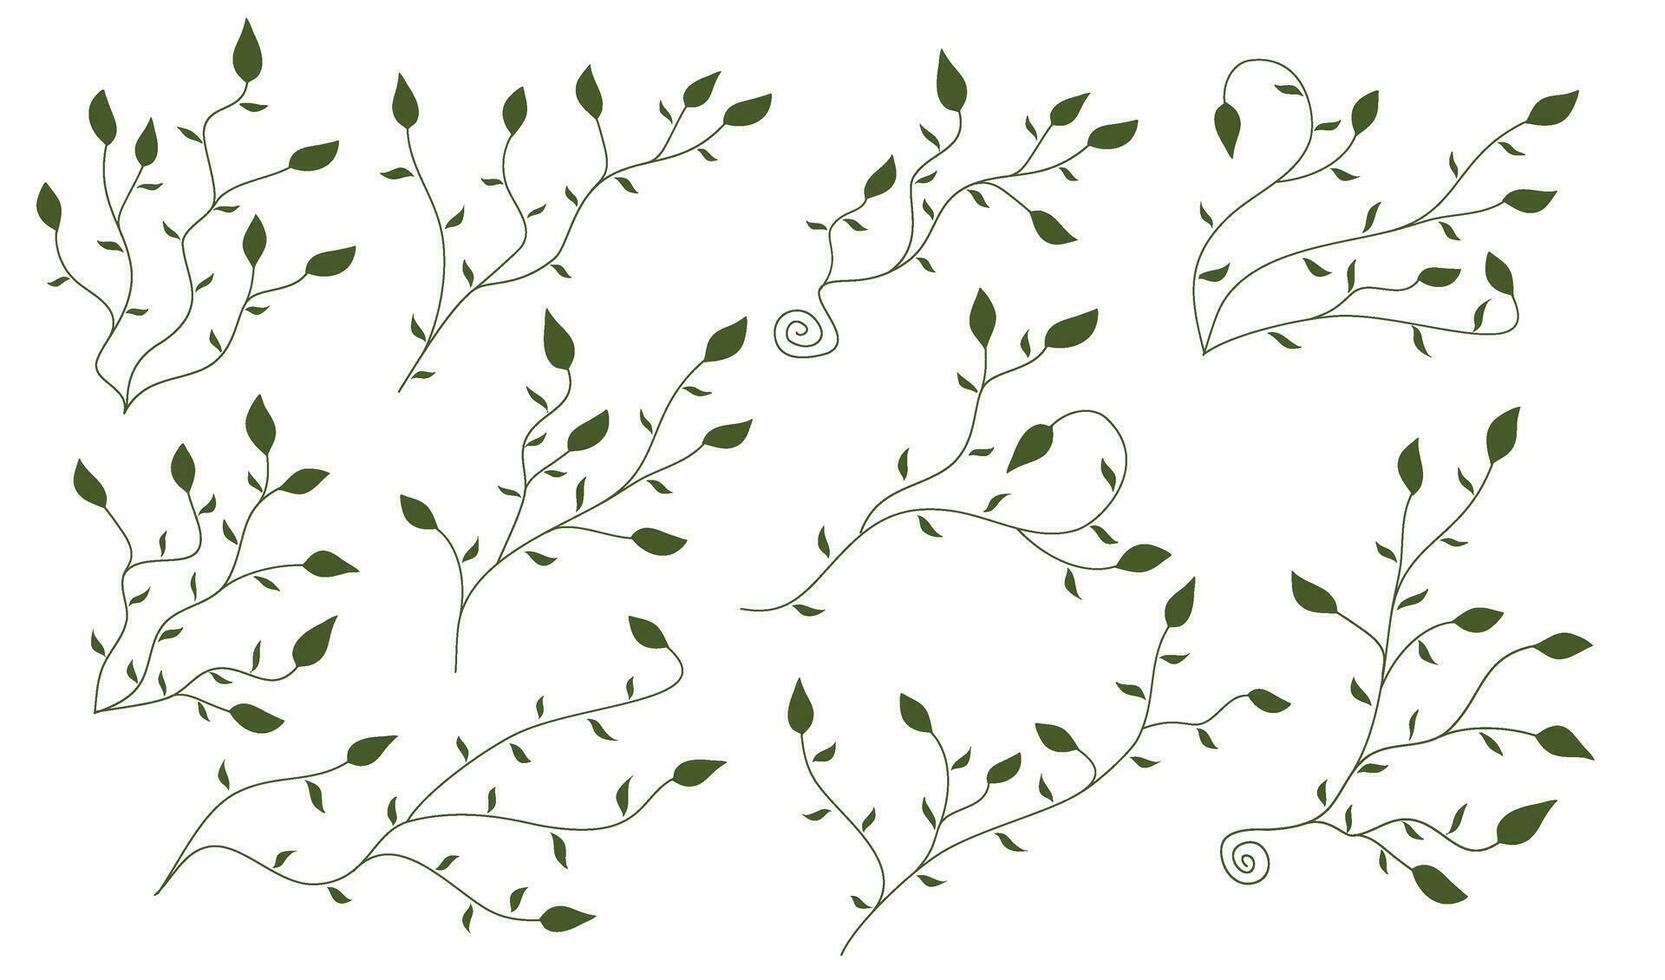 mano dibujado hoja marco. silueta ramas con hojas. mano dibujado de rama y hoja. mano dibujado hojas. rosado hoja decoración. vector